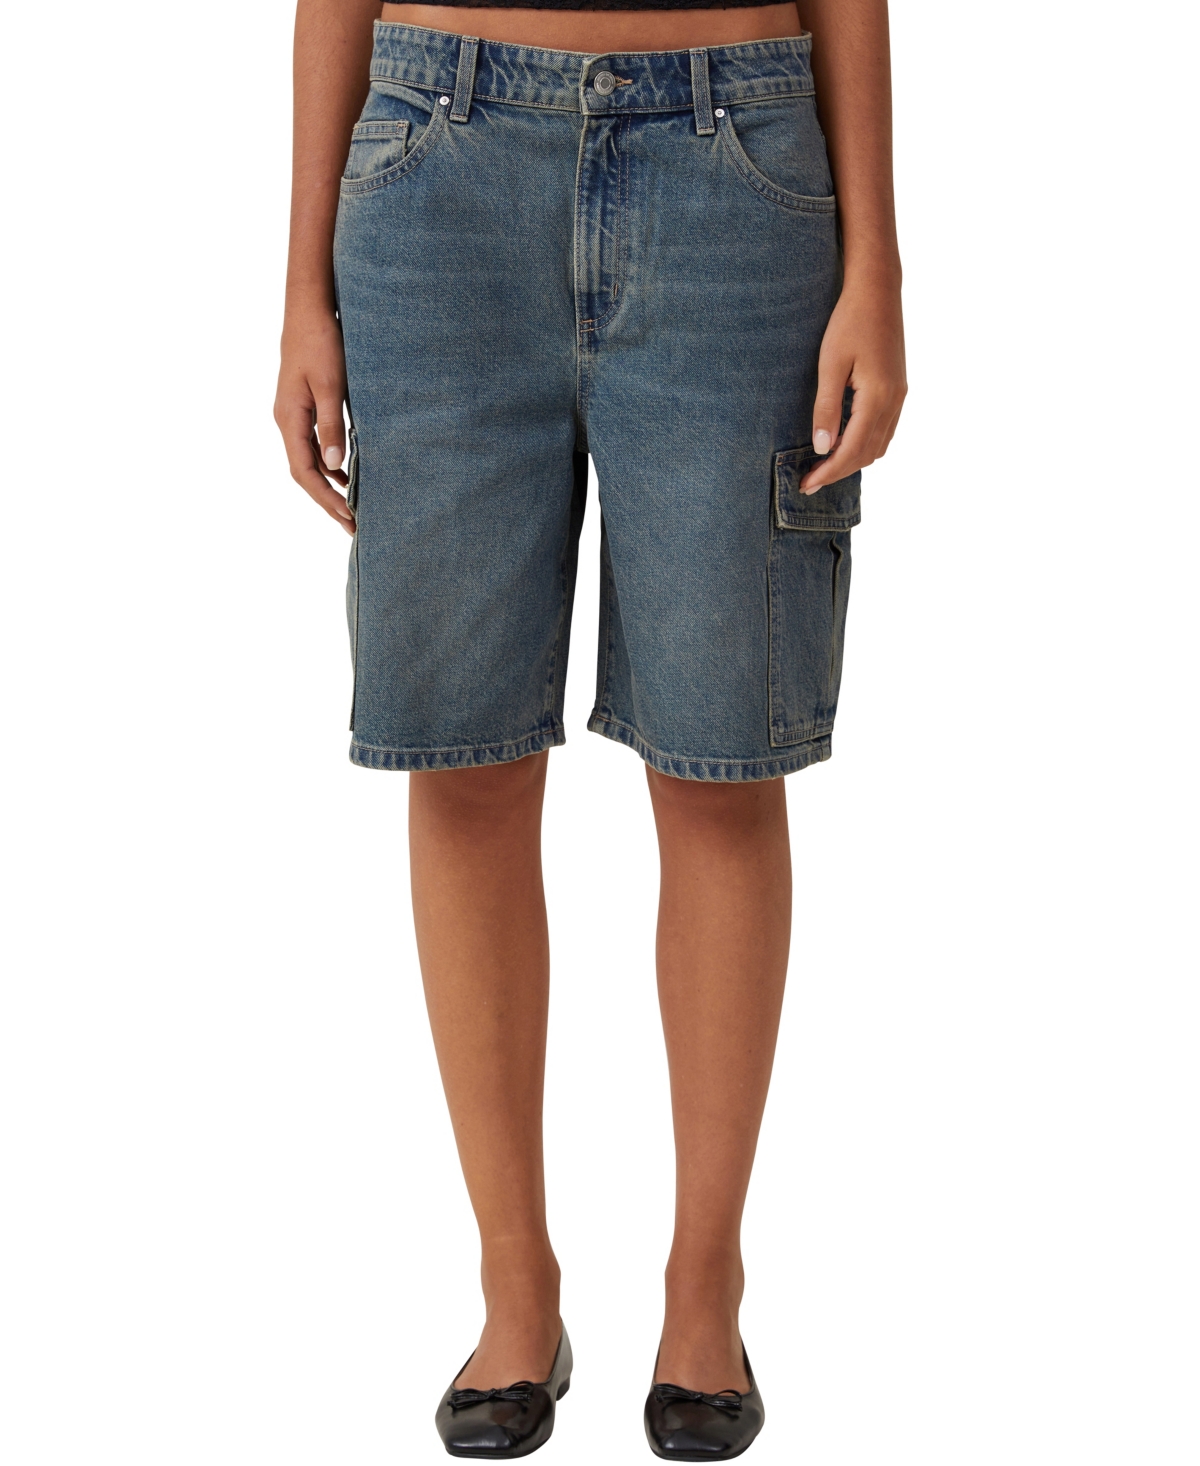 Women's Super Baggy Cargo Denim Jort Shorts - Blue